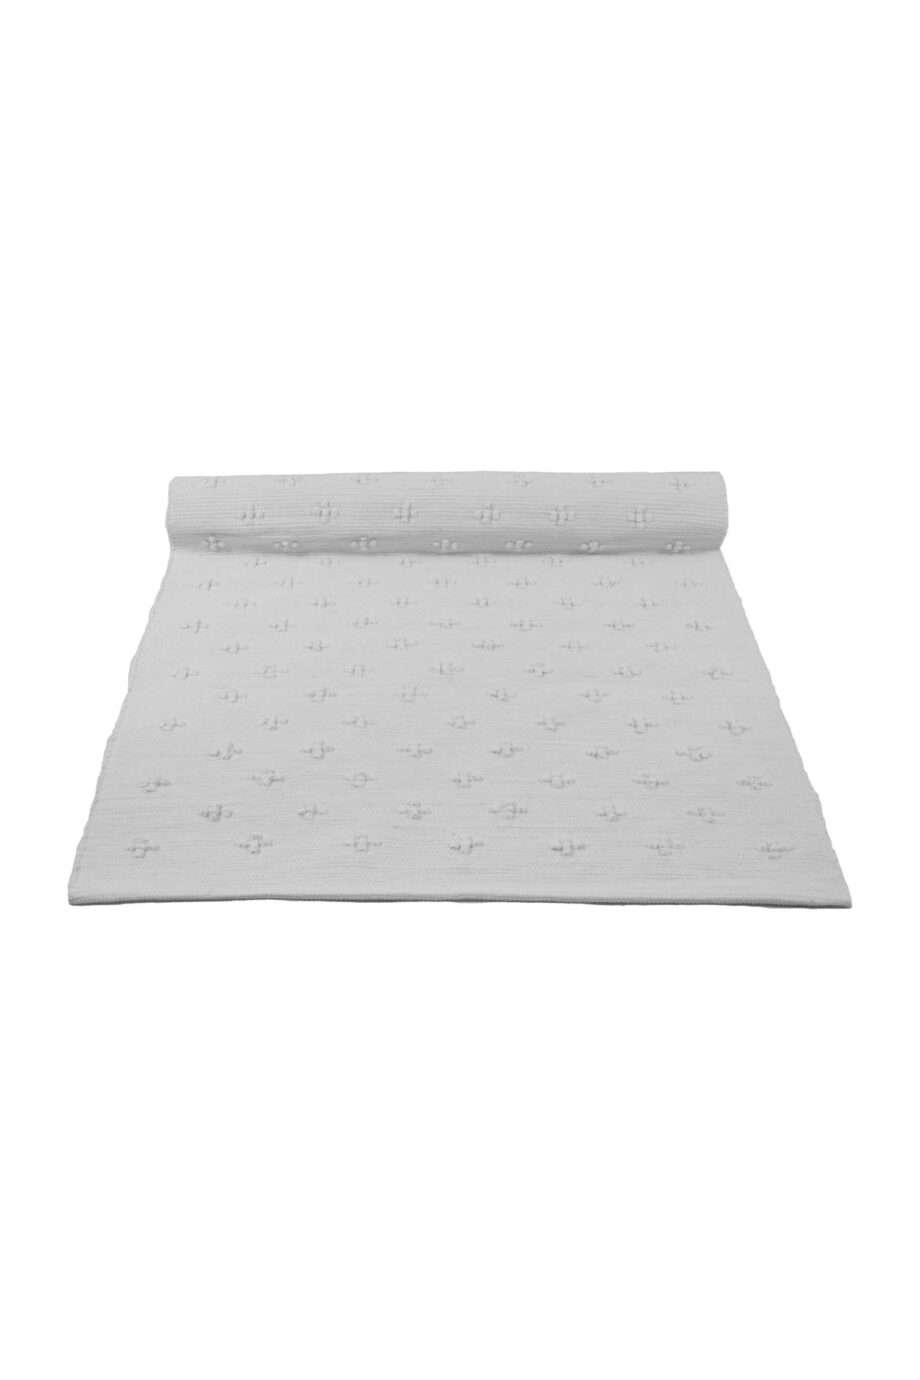 liz white woven cotton floor mat small